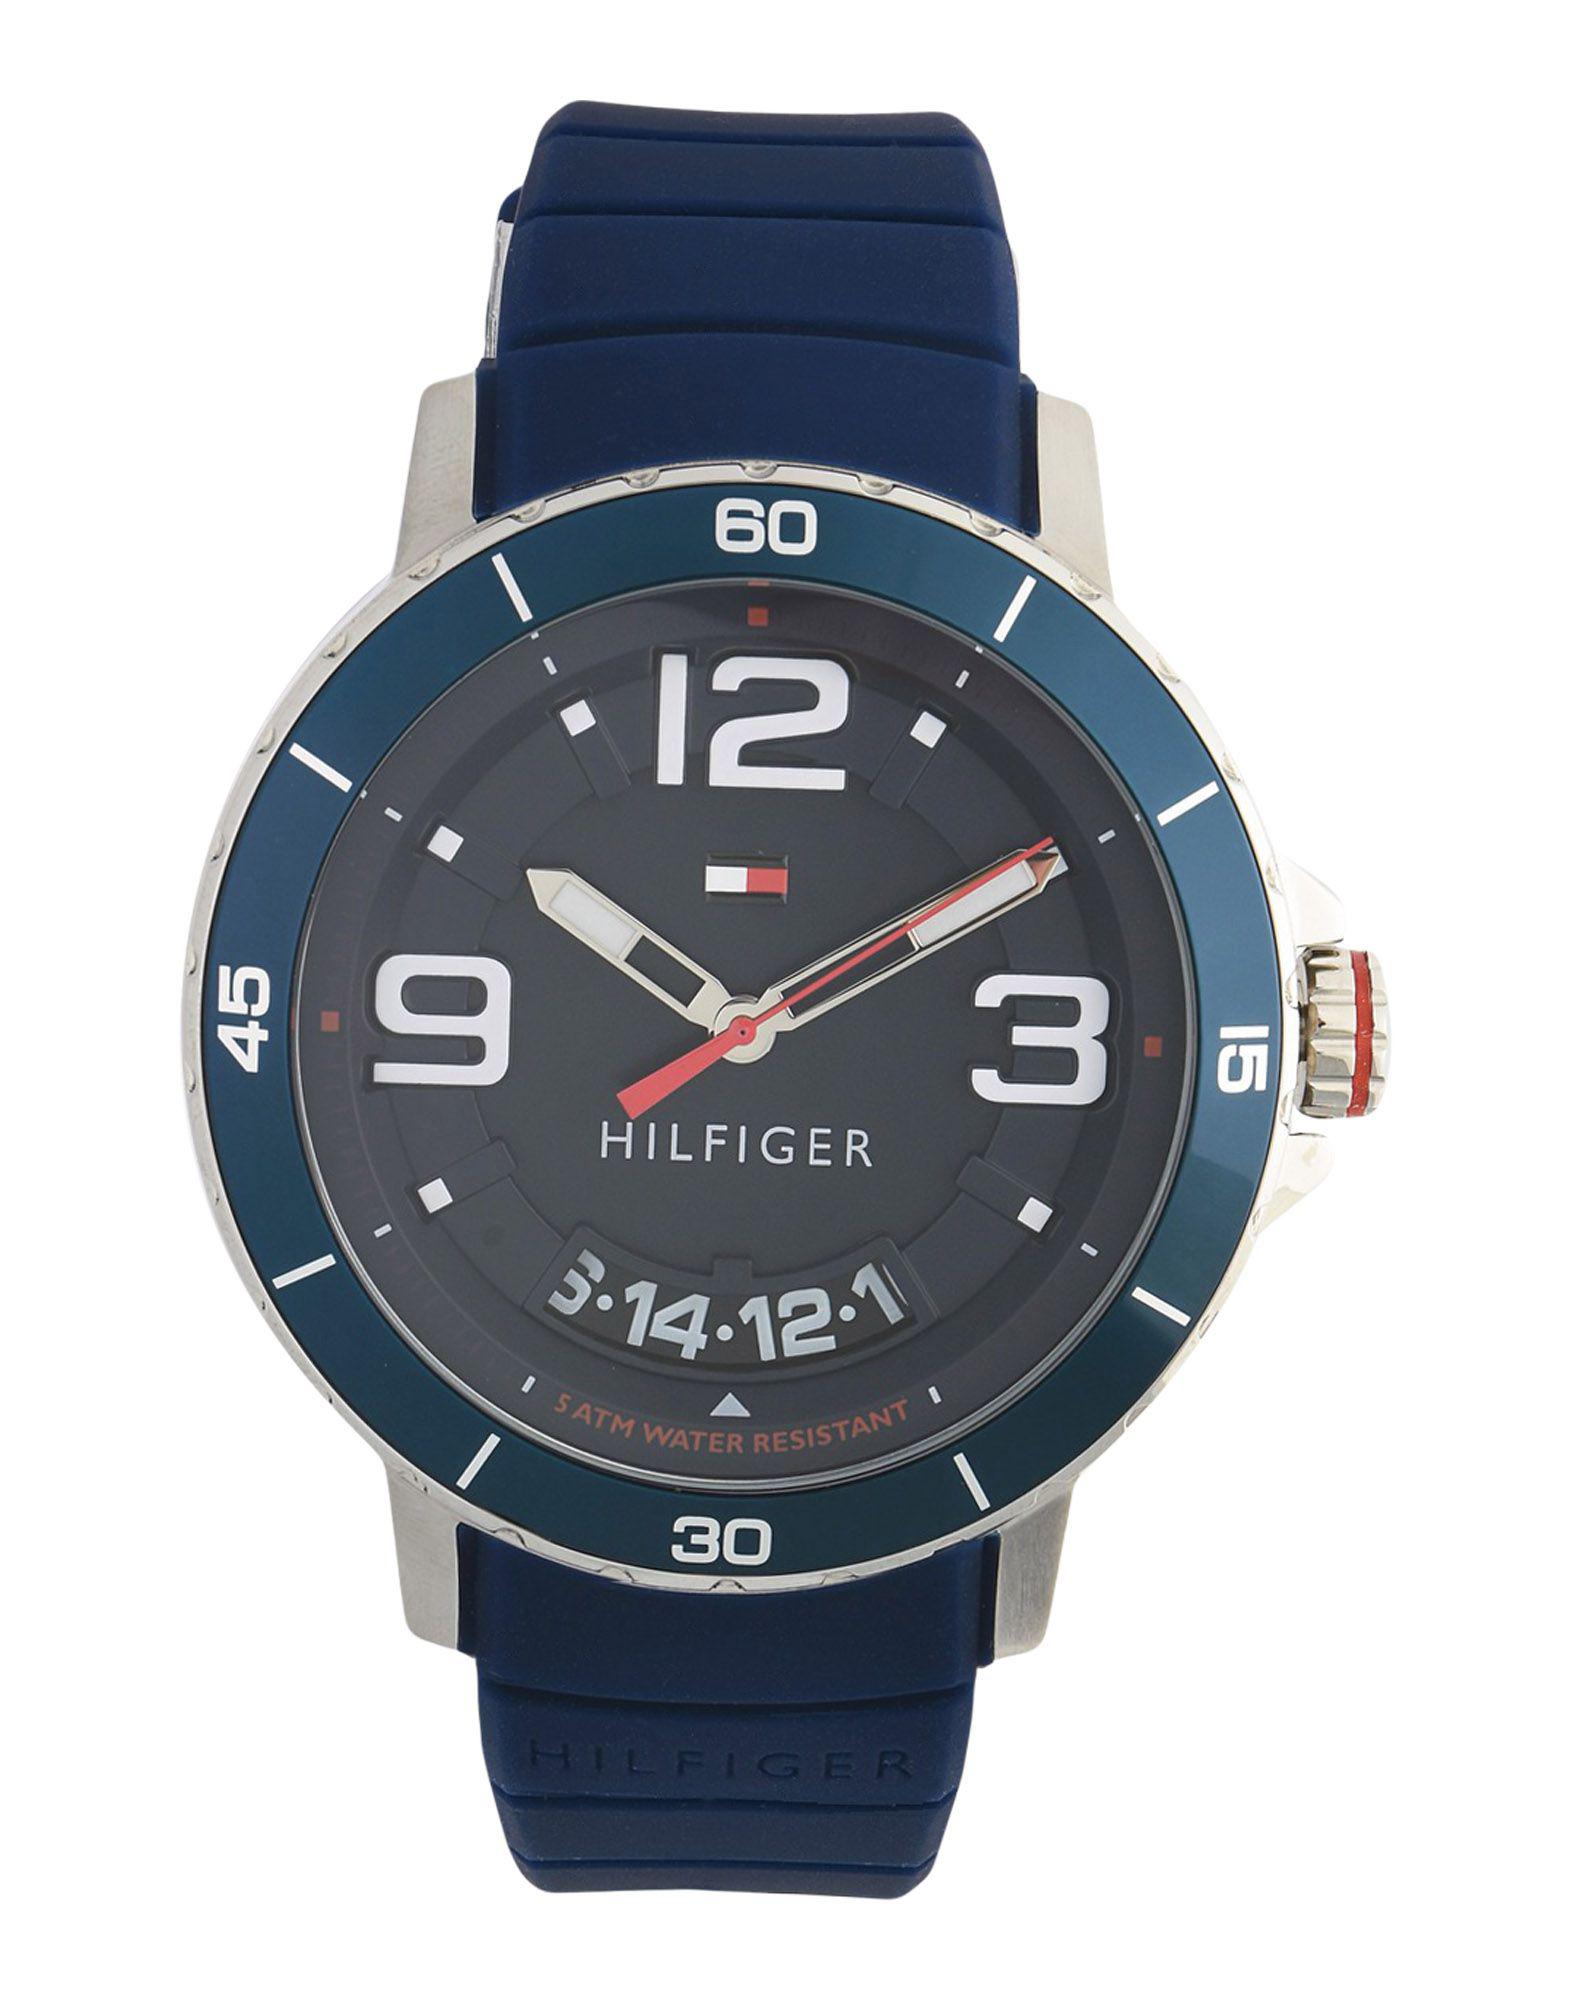 Tommy Hilfiger Rubber Wrist Watch in Dark Blue (Blue) for Men - Lyst